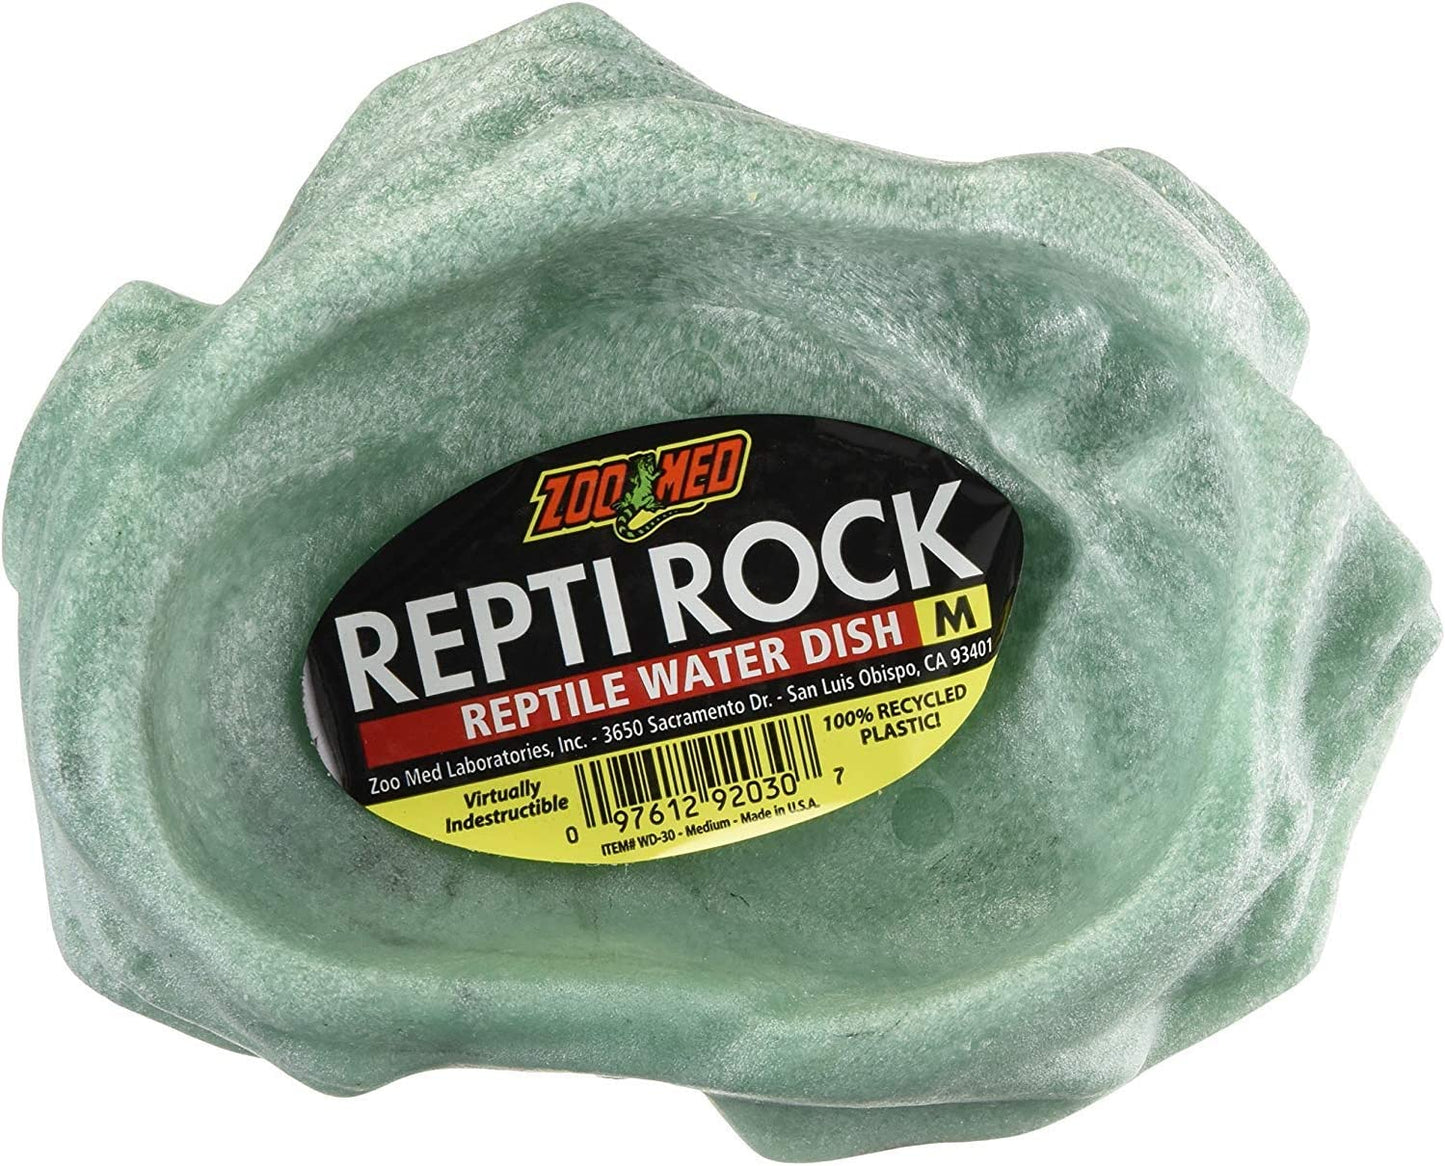 Zoo Med Repti Rock Reptile Water Dish